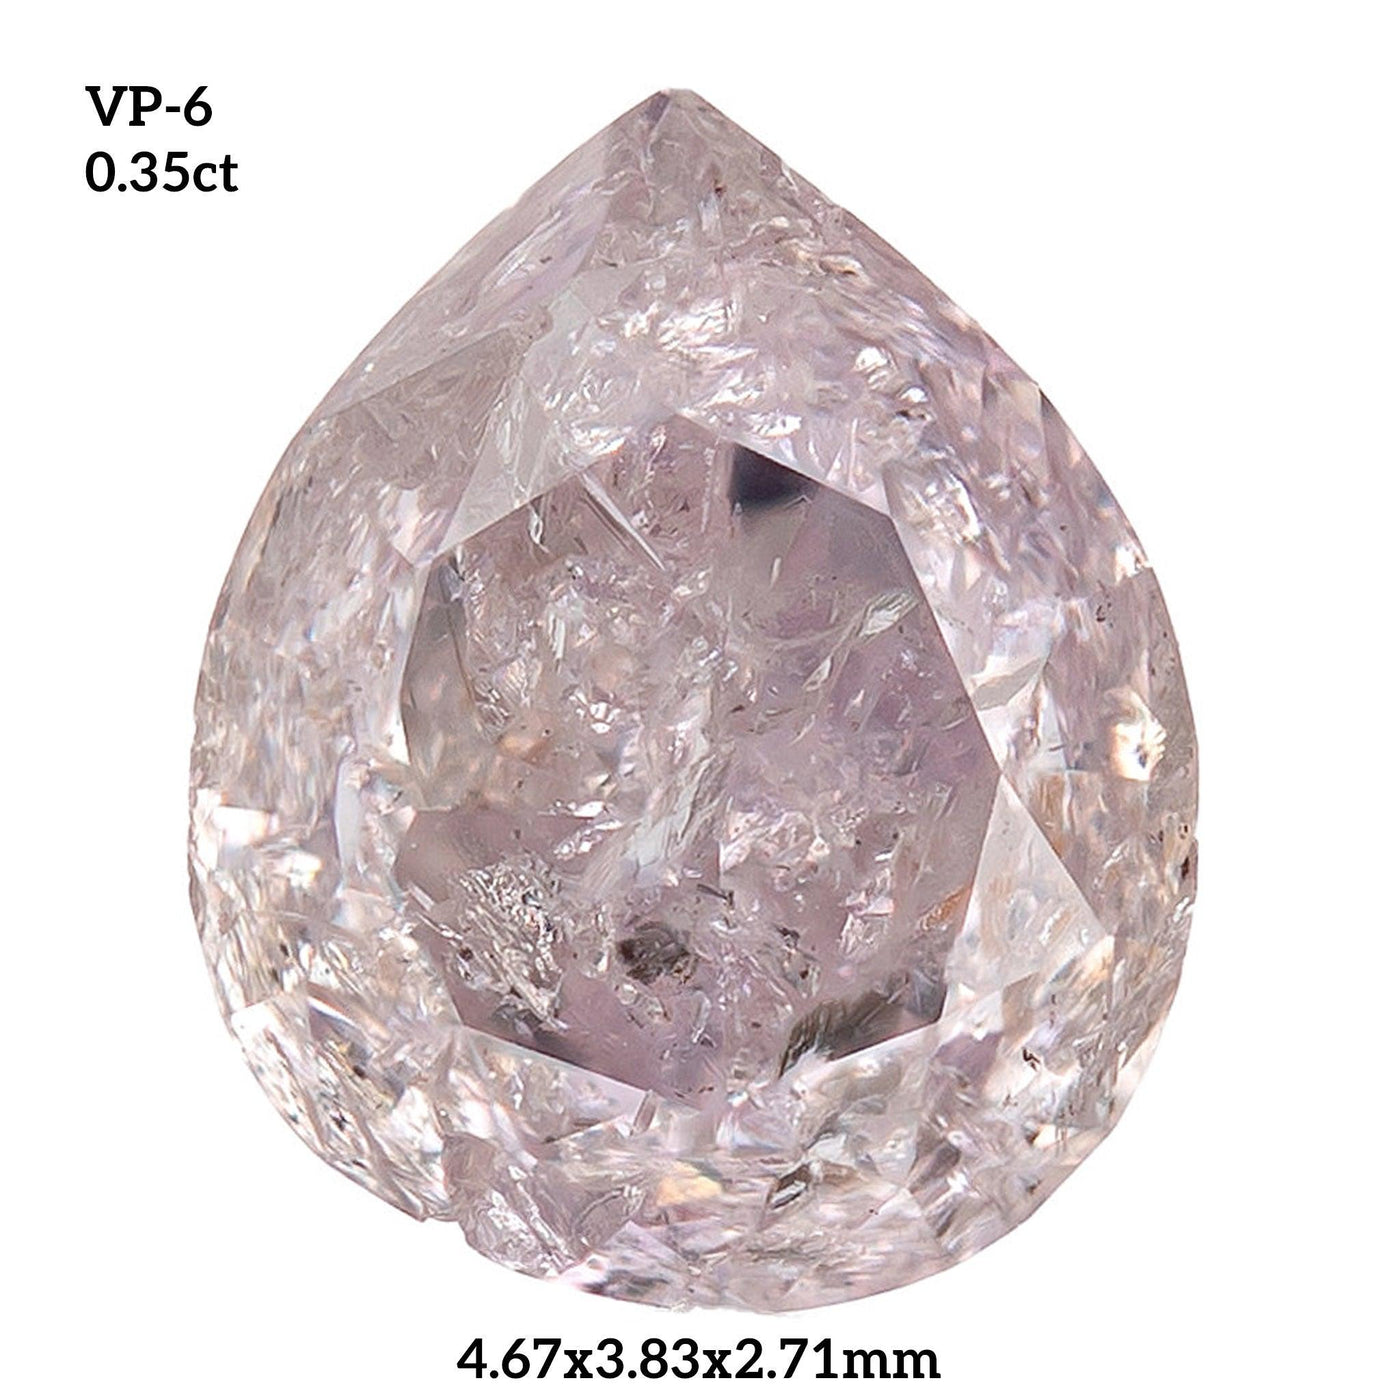 VP6 - Vivid pink pear diamond